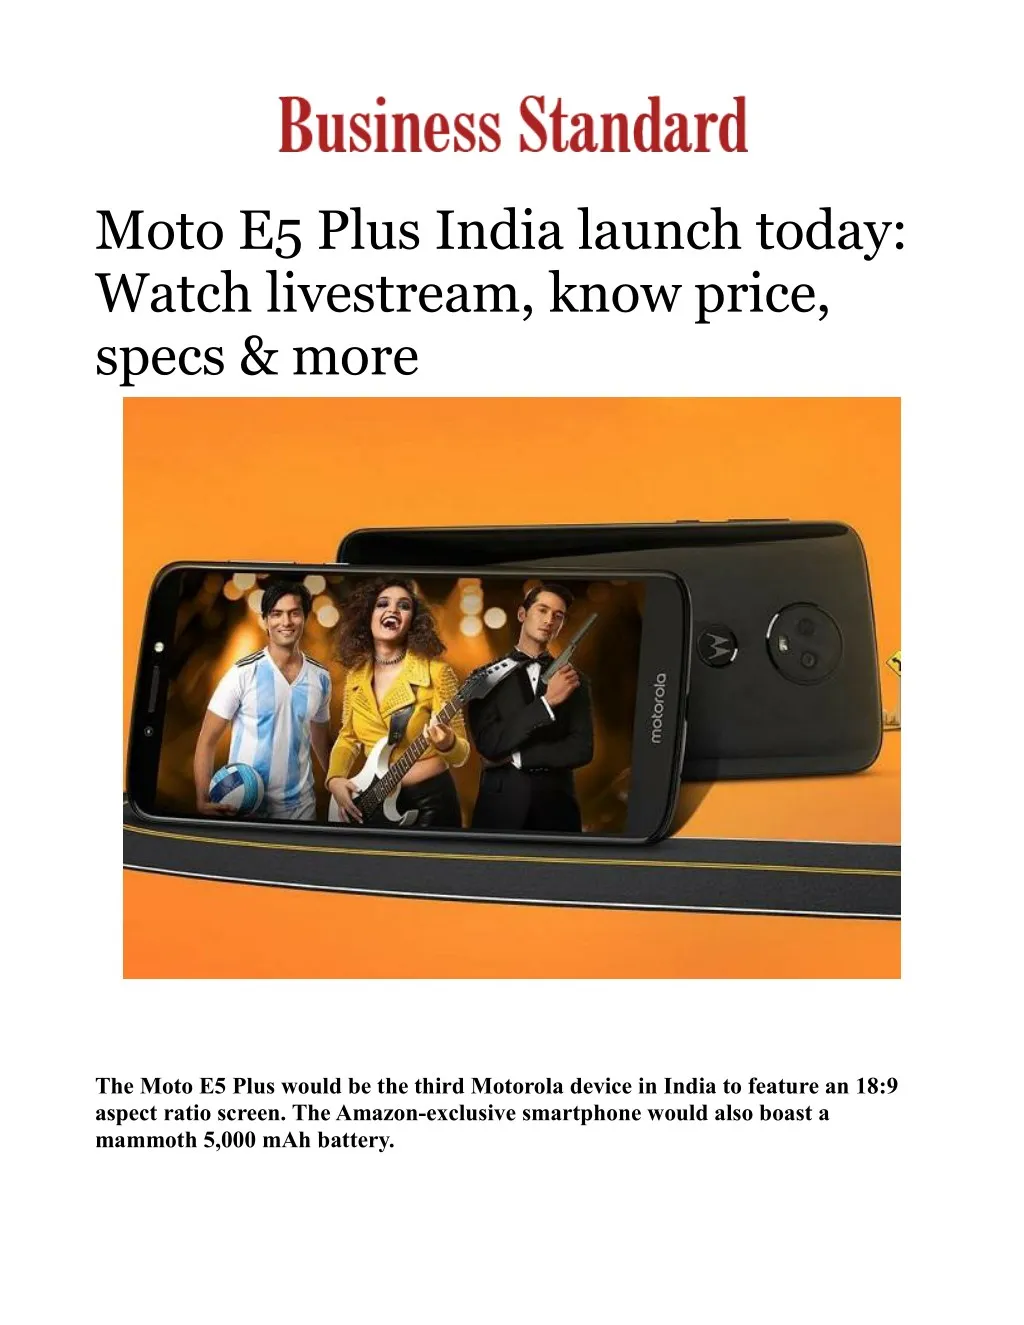 moto e5 plus india launch today watch livestream